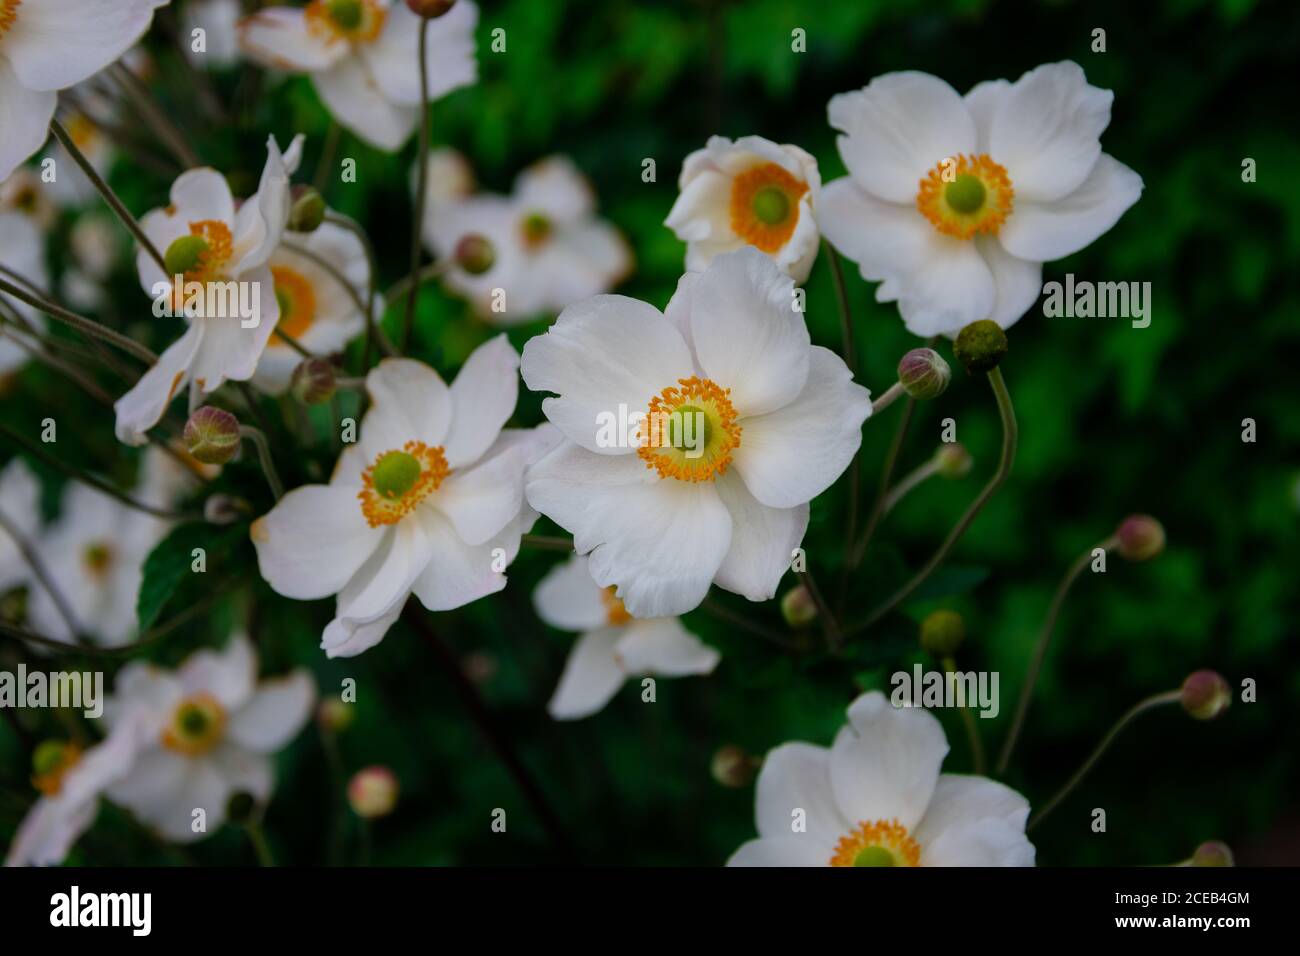 View of Japanese Anemones or windflowers (Anemone hupehensis) Stock Photo